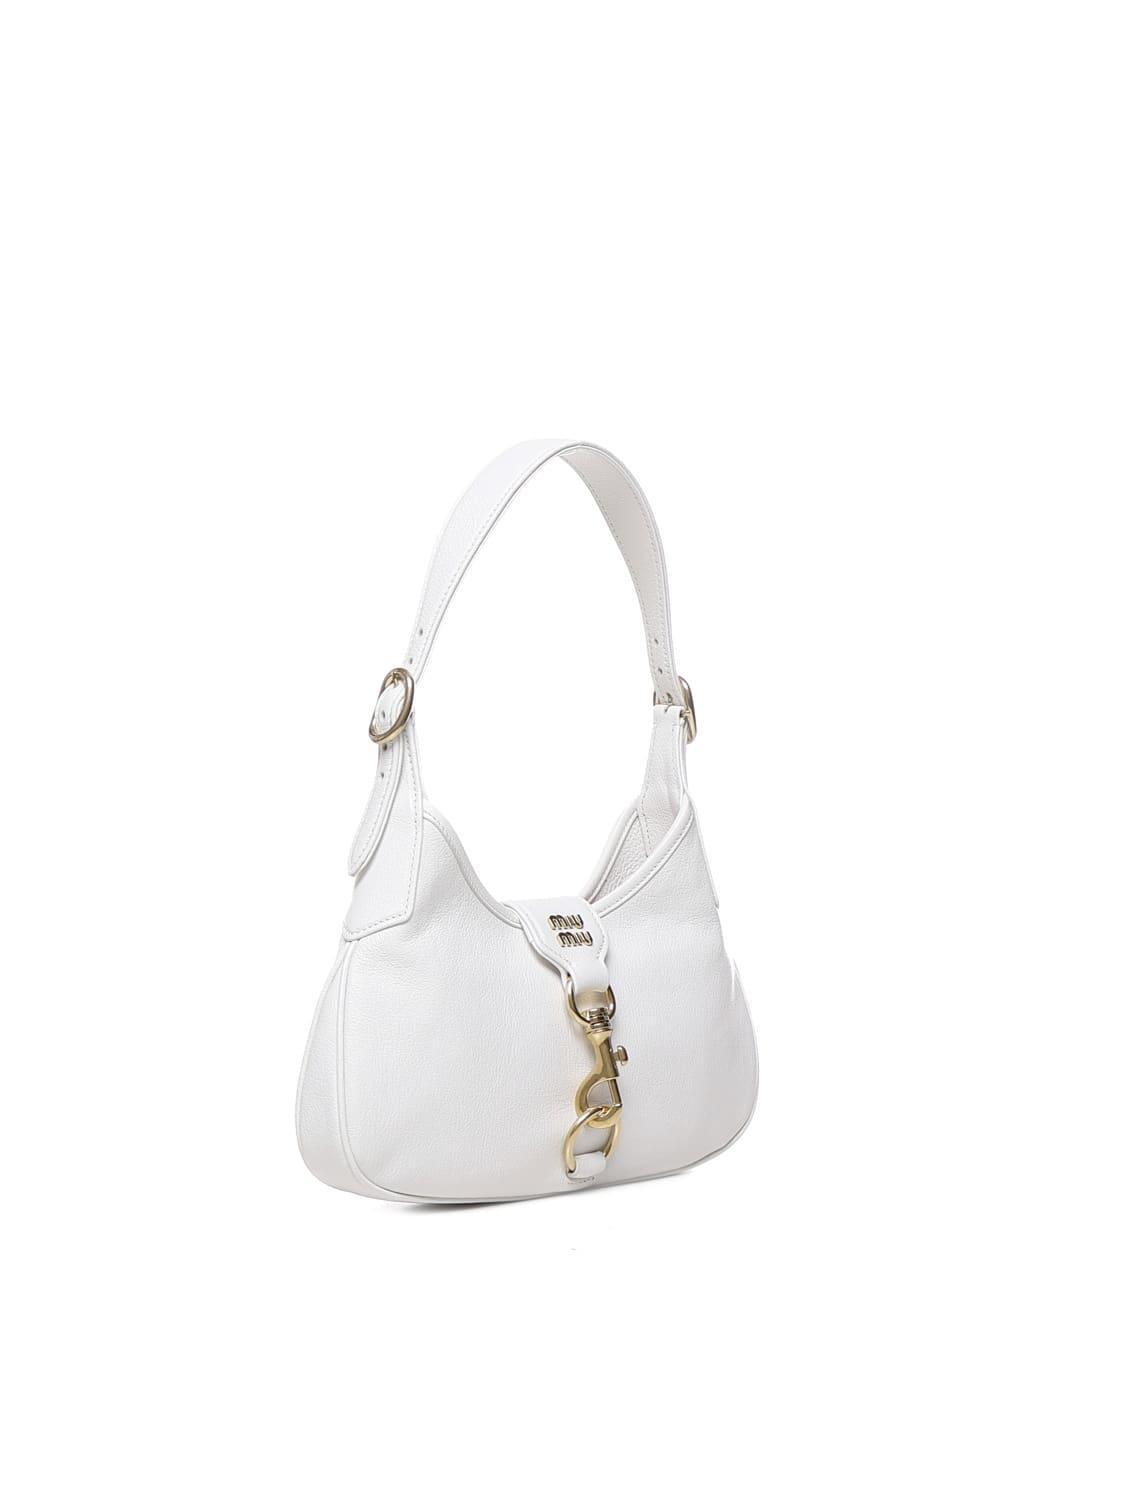 Madras Small Leather Shoulder Bag in White - Miu Miu